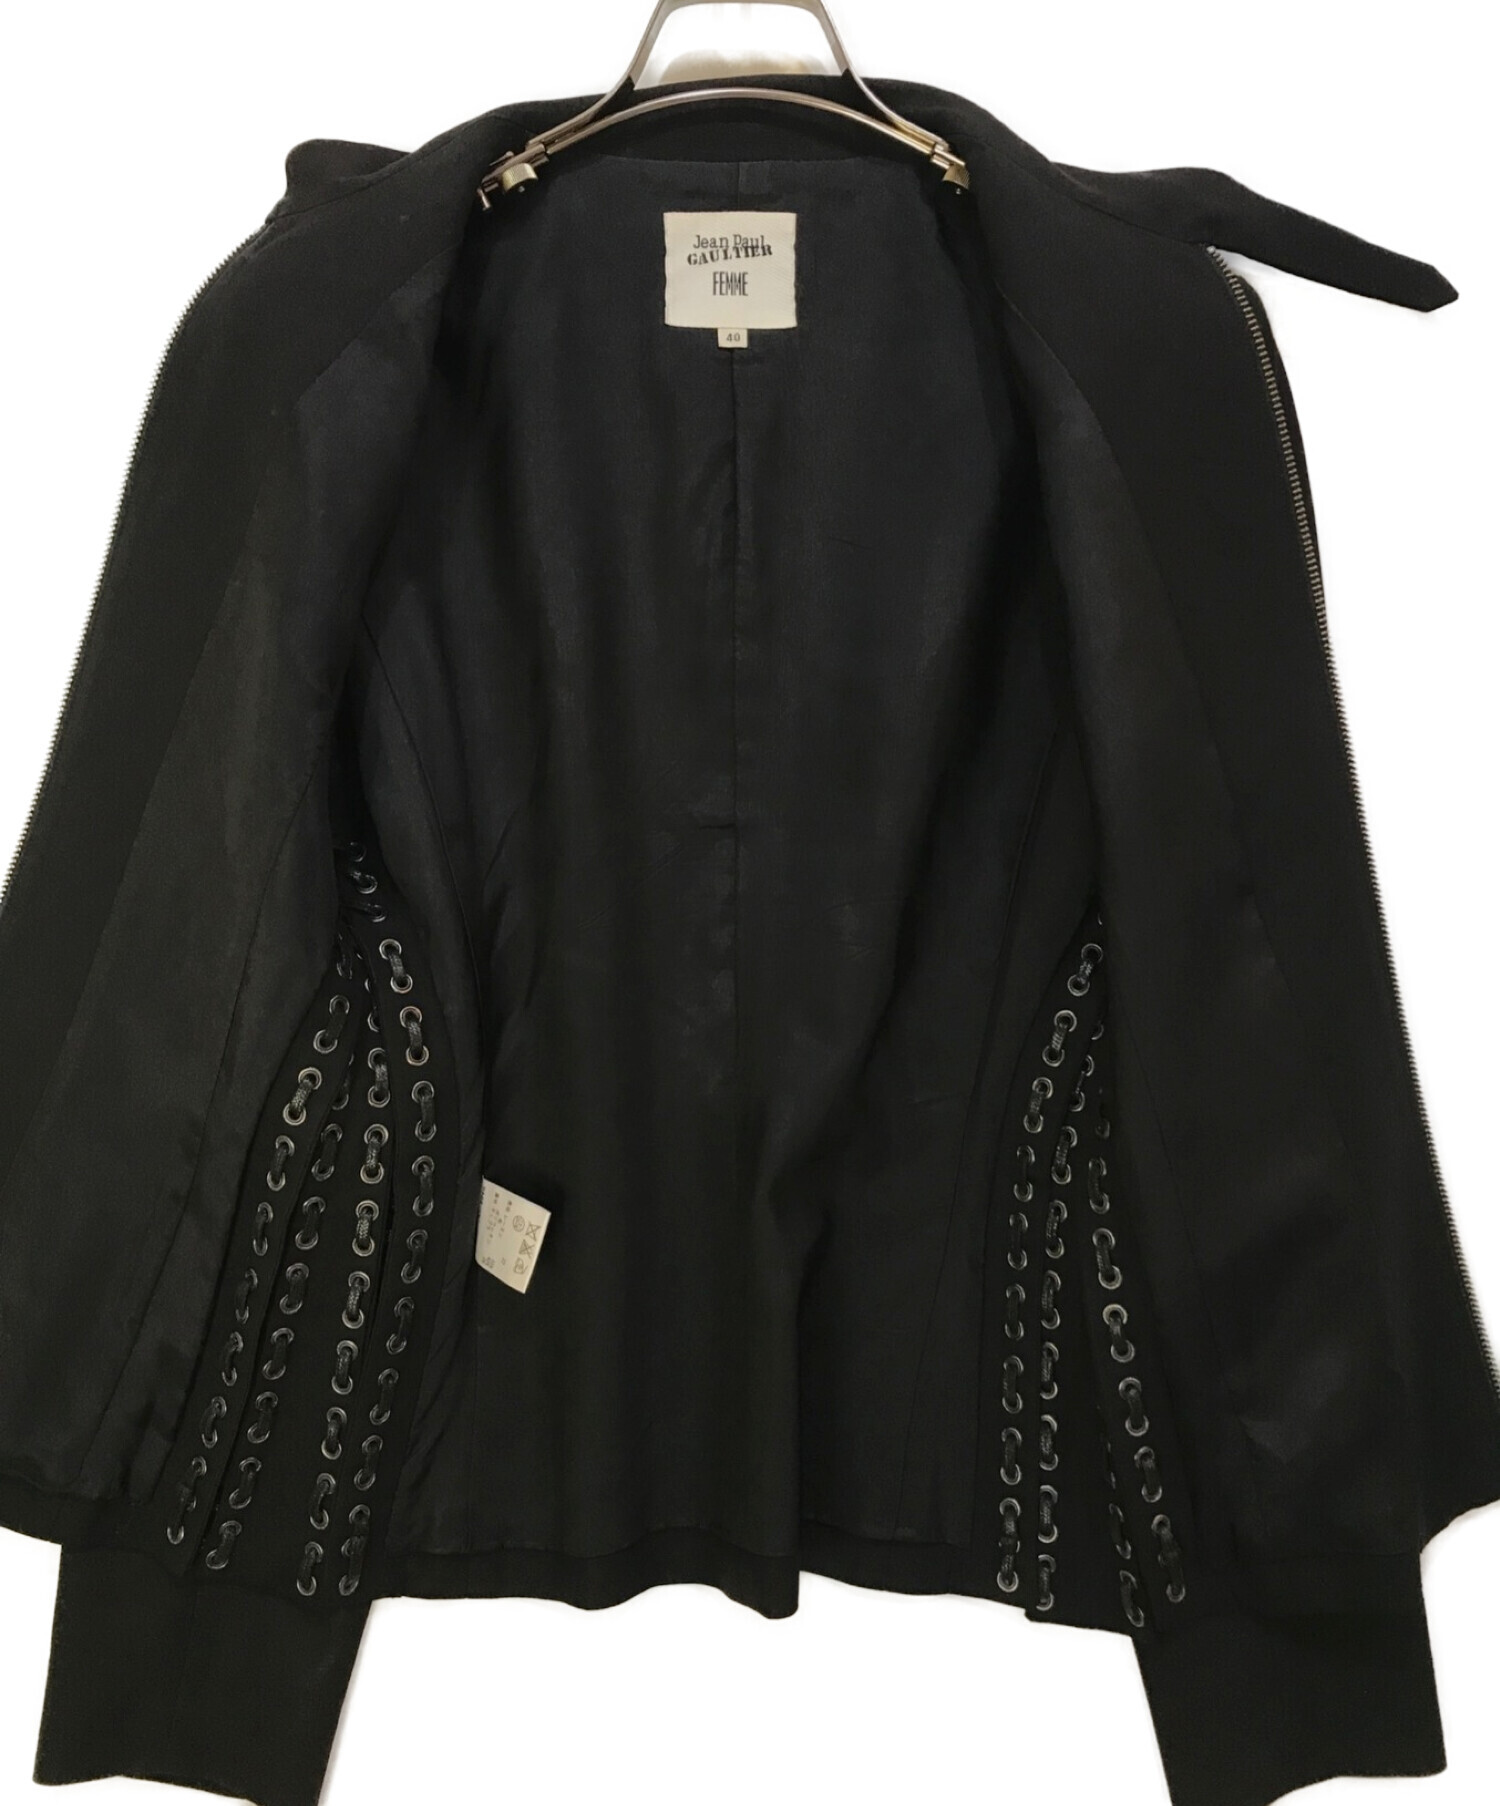 Jean Paul Gaultier FEMME (ジャンポールゴルチェフェム) ジップジャケット ブラック サイズ:40